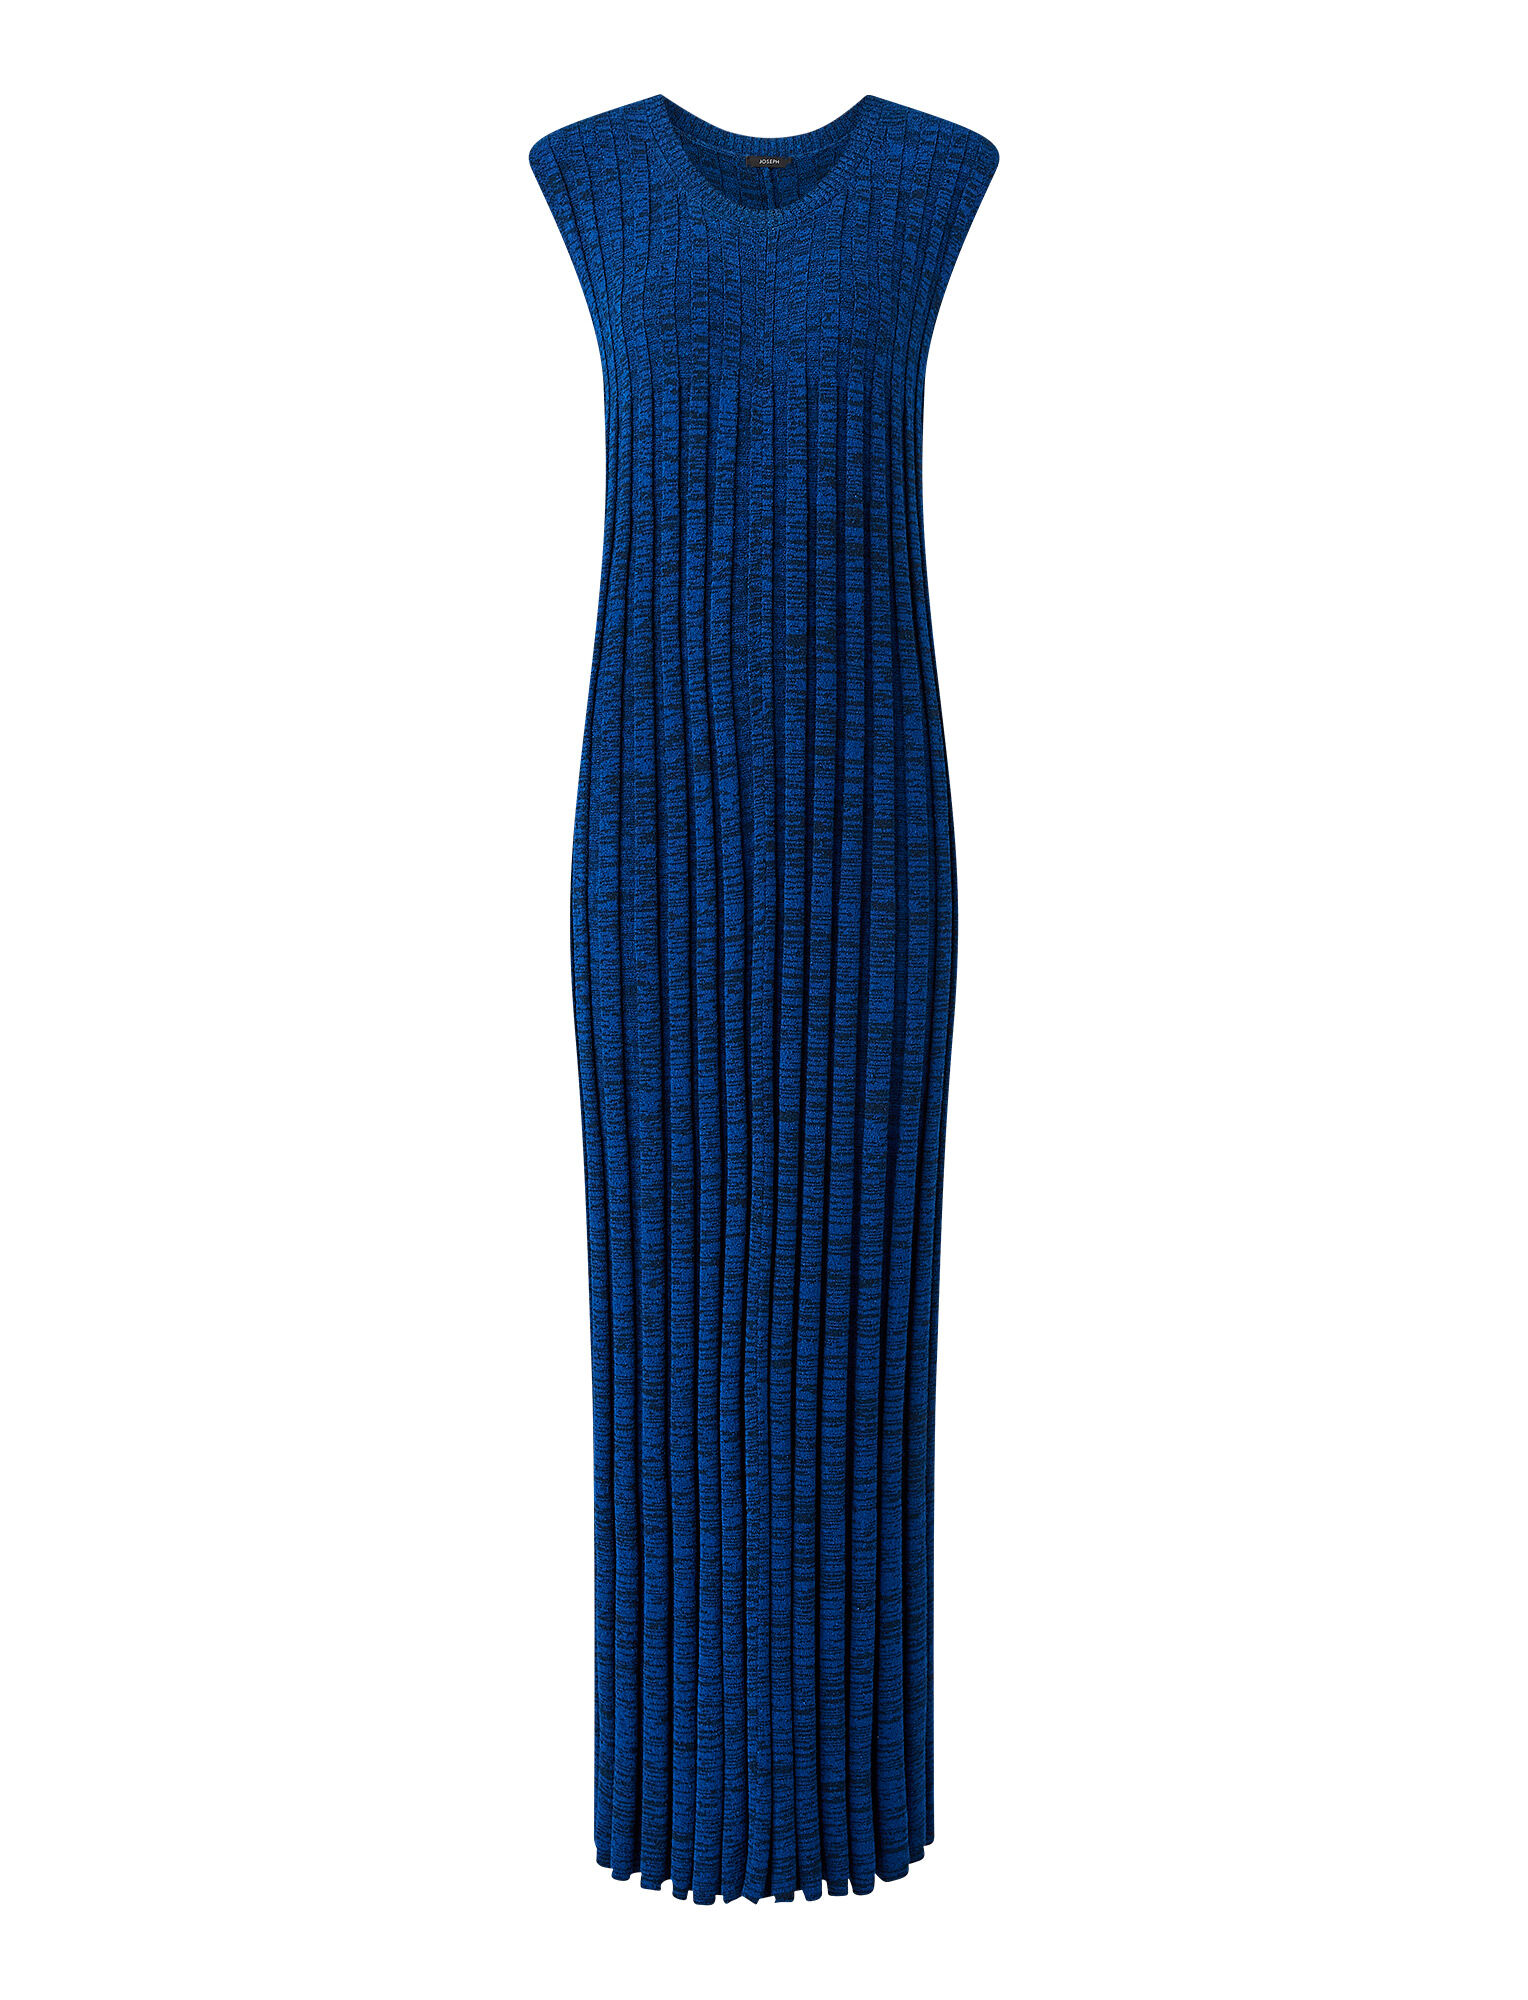 Joseph, Textured Rib Dress, in COBALT BLUE